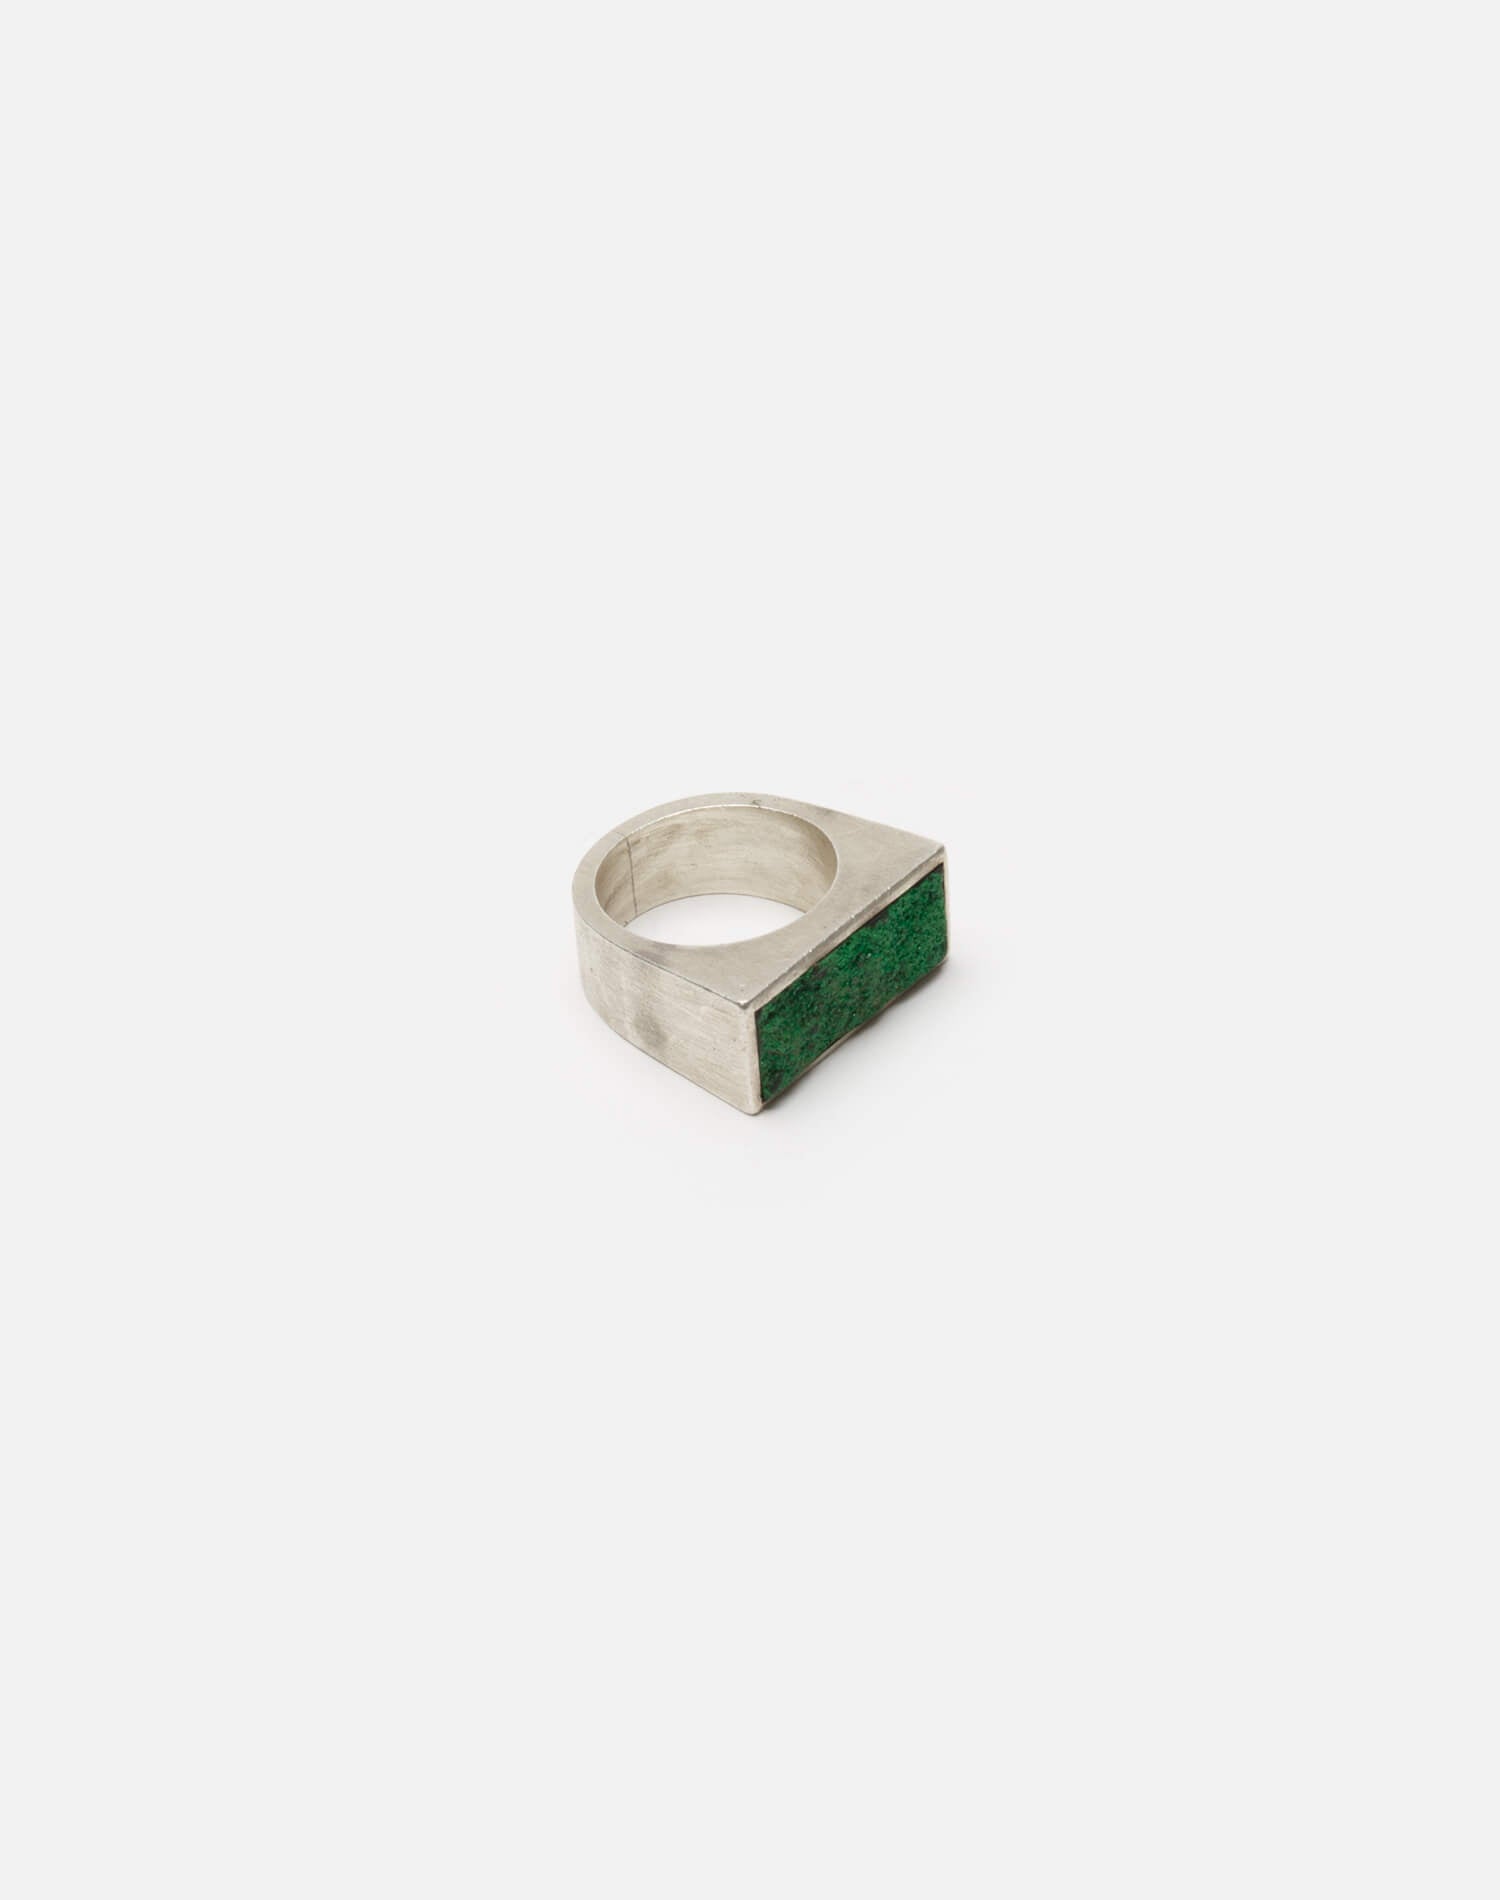 50's Green Druzy Quartz Artisan Made Sterling Silver Ring